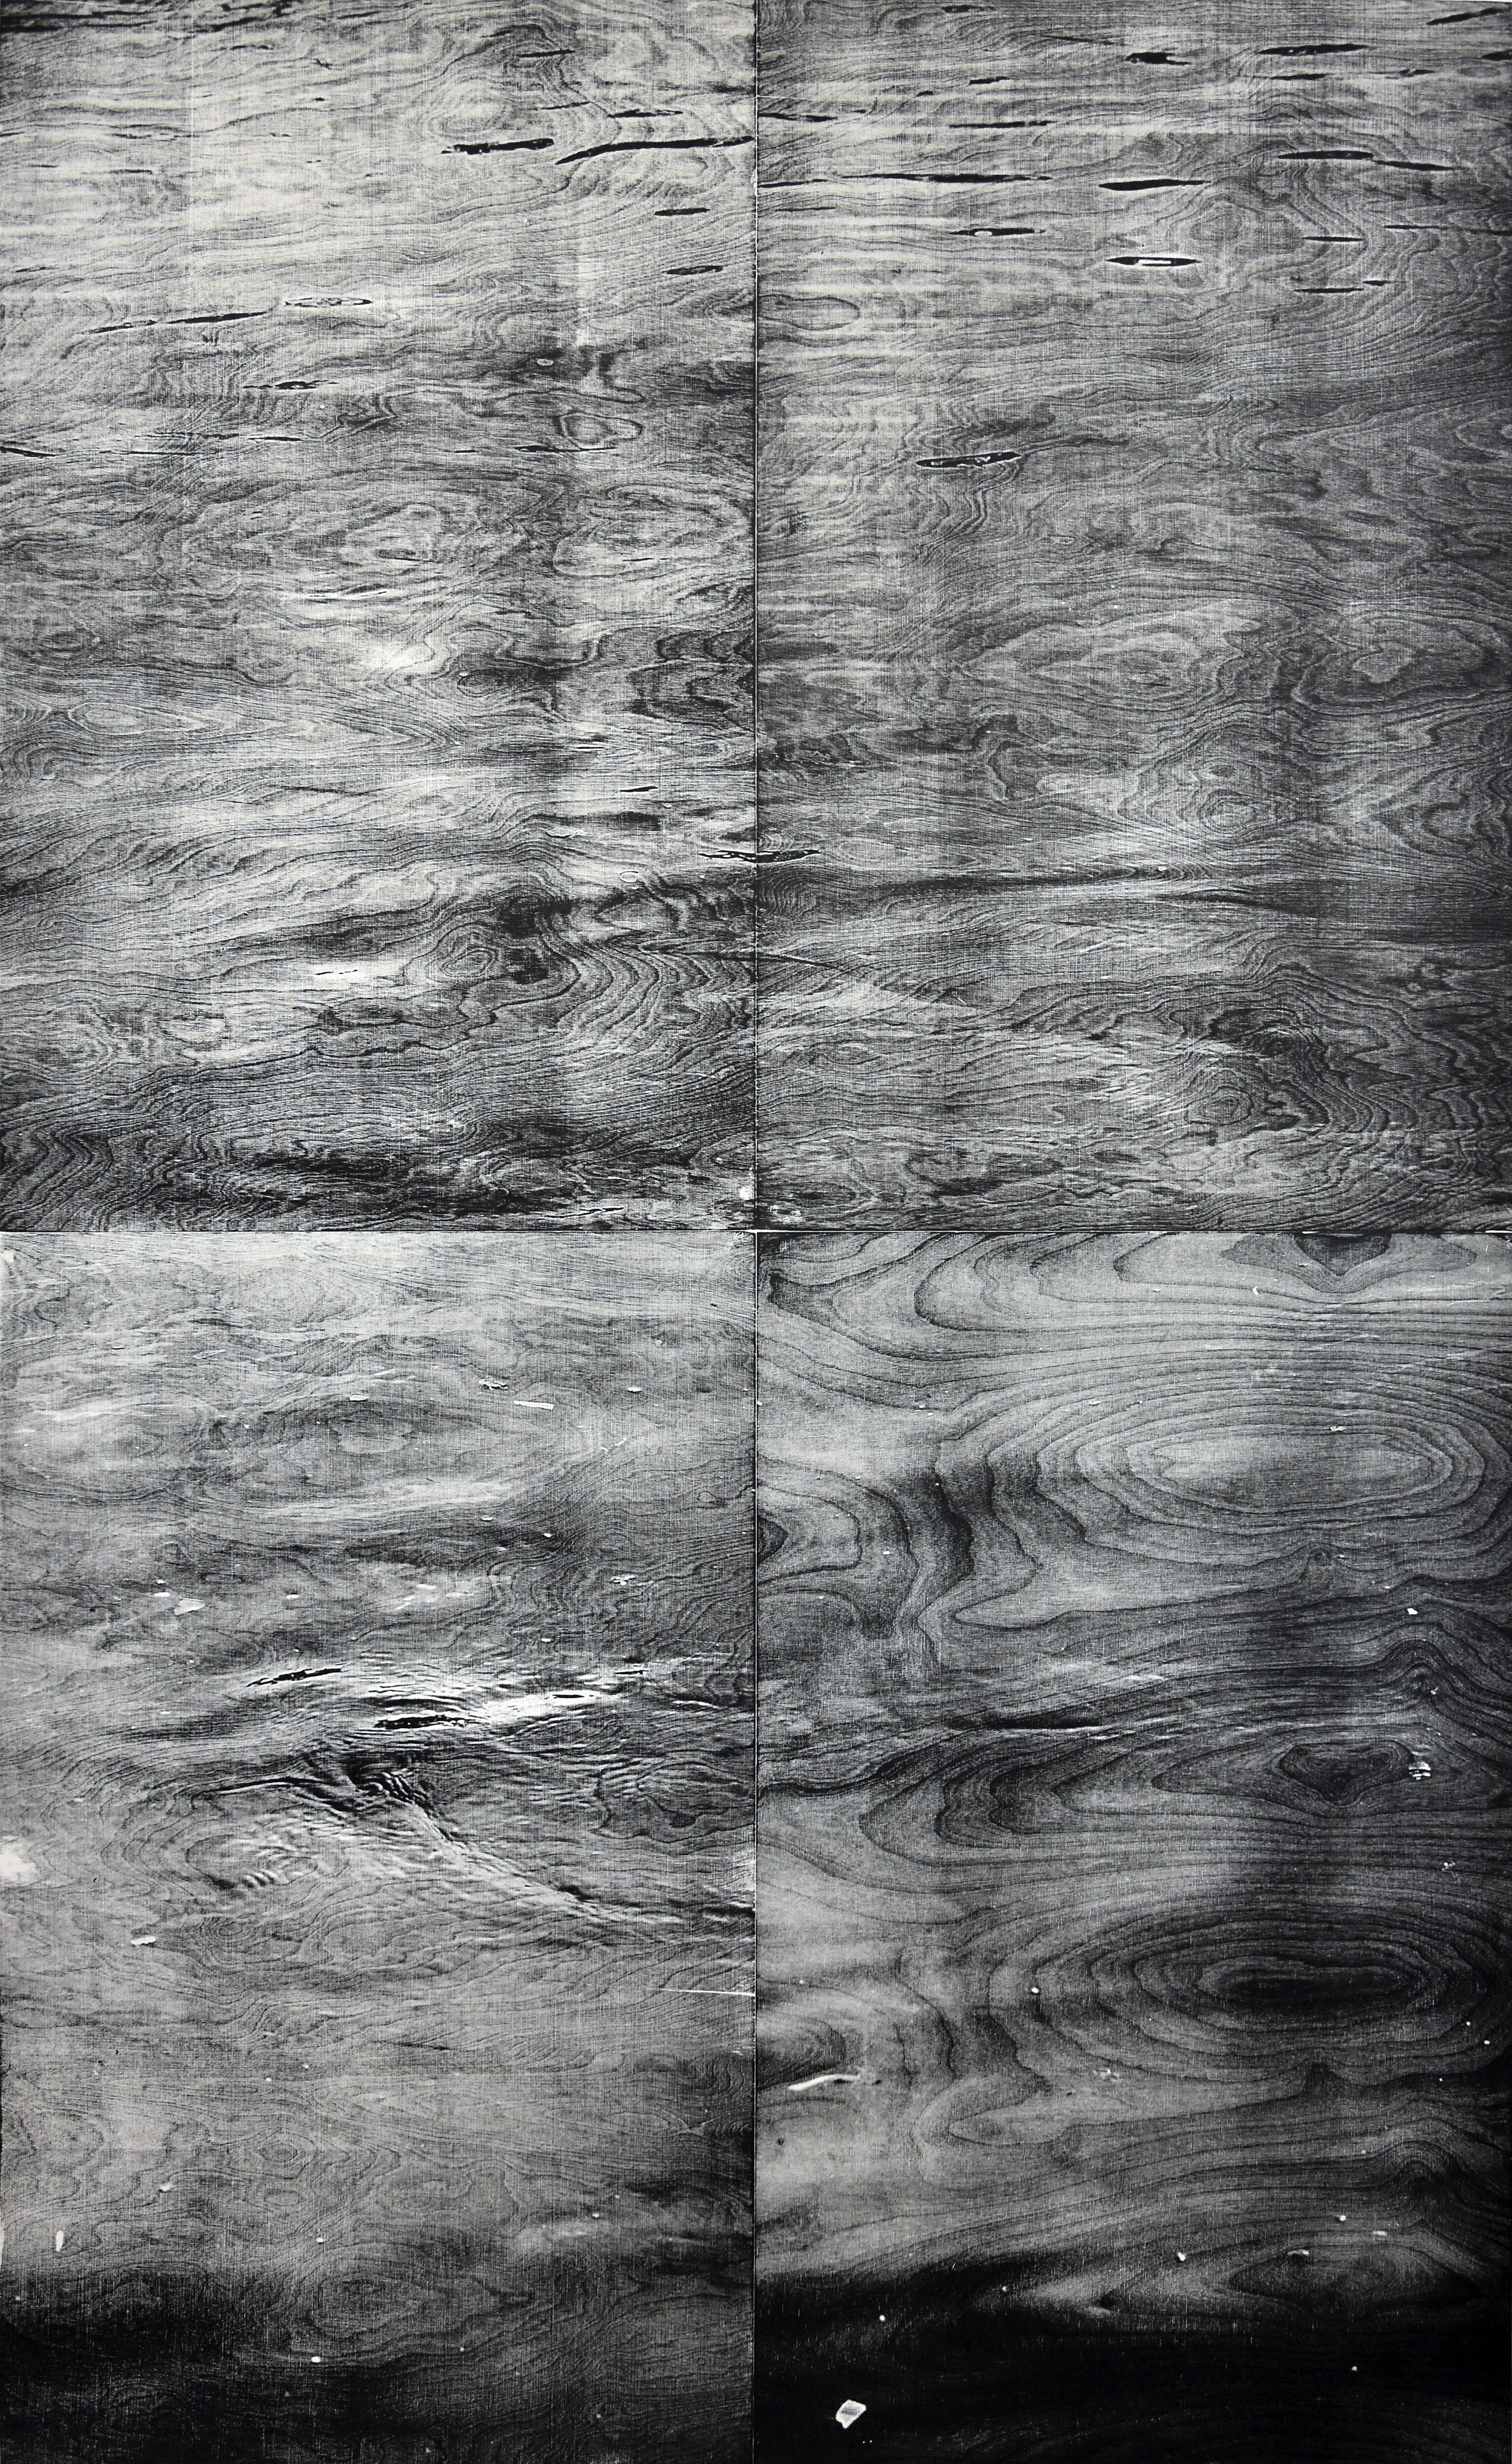 Rhein I, 2018, wood engraving (birch), 209,2 x 130,1 cm, Genaro Strobel